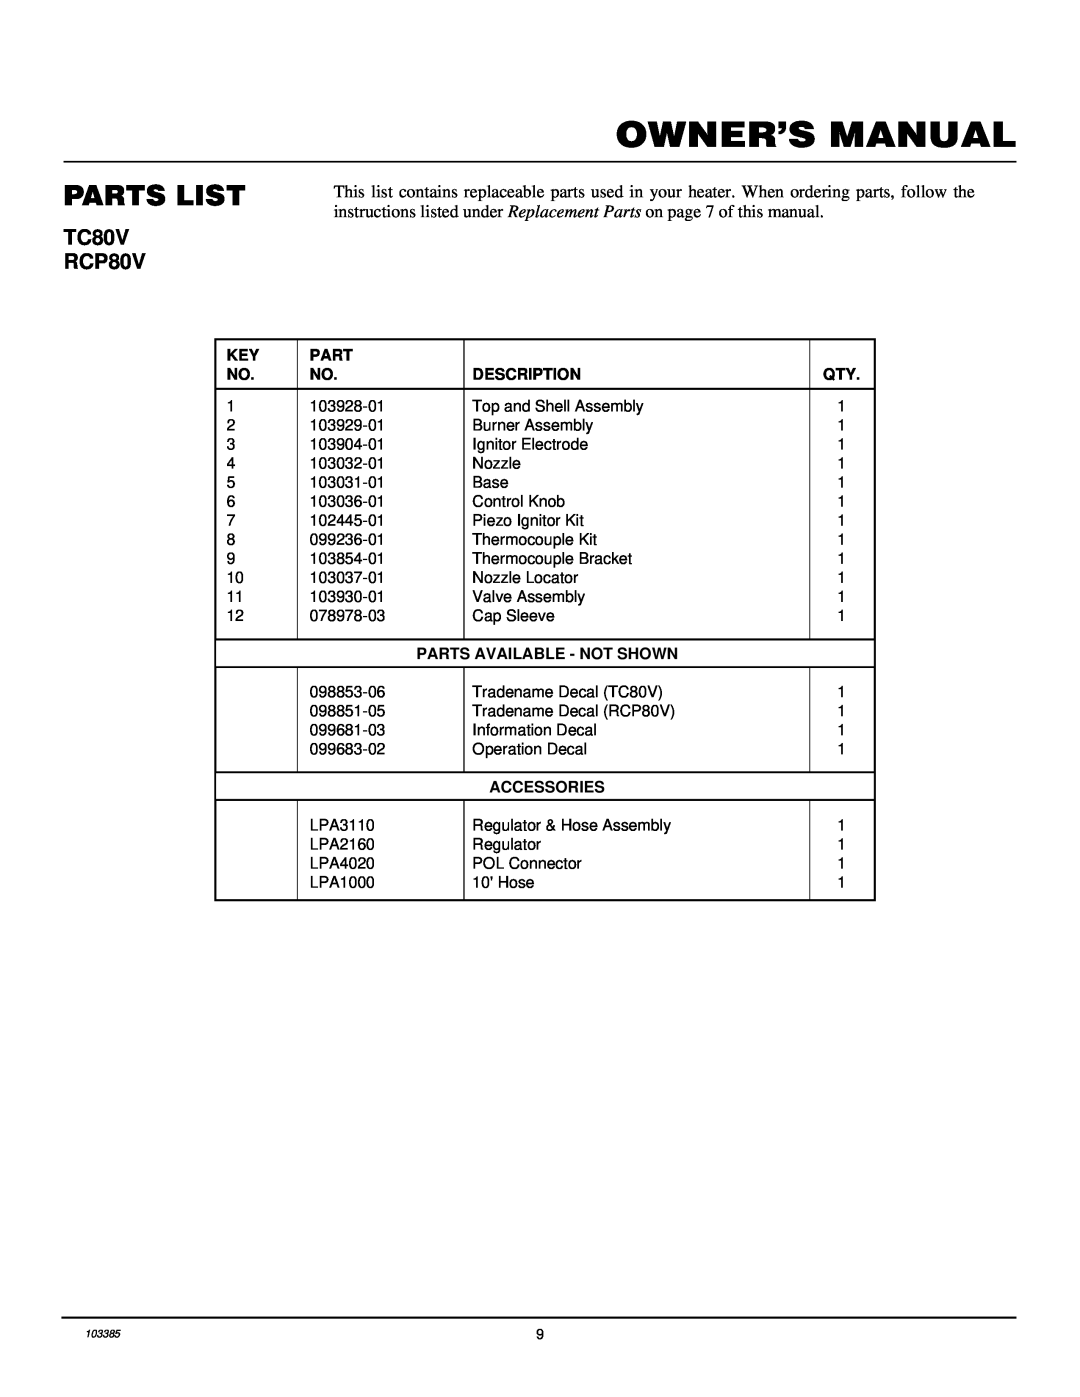 Desa RCP80V, TC80V owner manual Parts List, Description, Parts Available - Not Shown, Accessories 